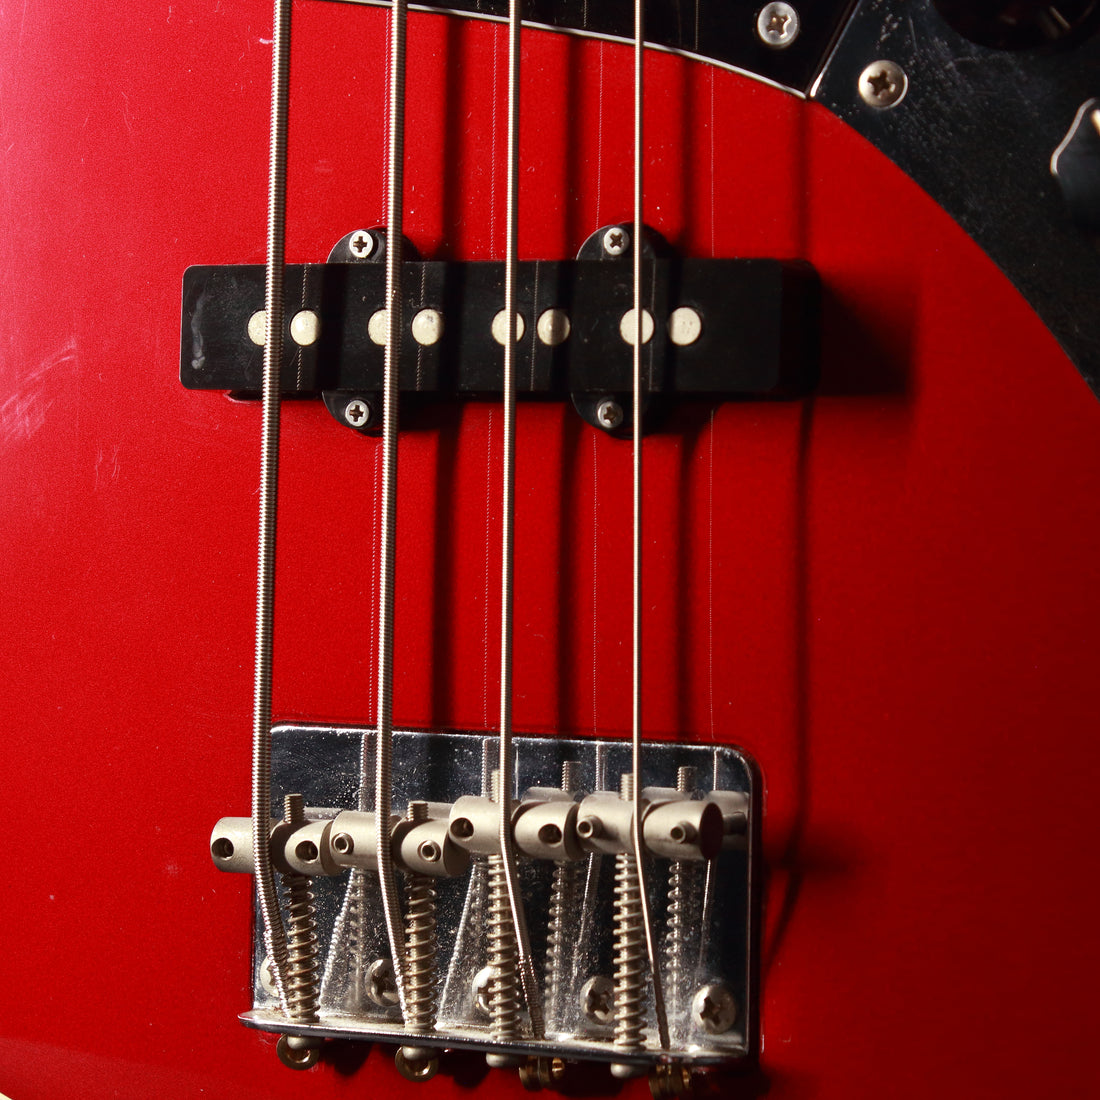 Fender Aerodyne Jazz Bass AJB-65 Old Candy Apple Red 2003